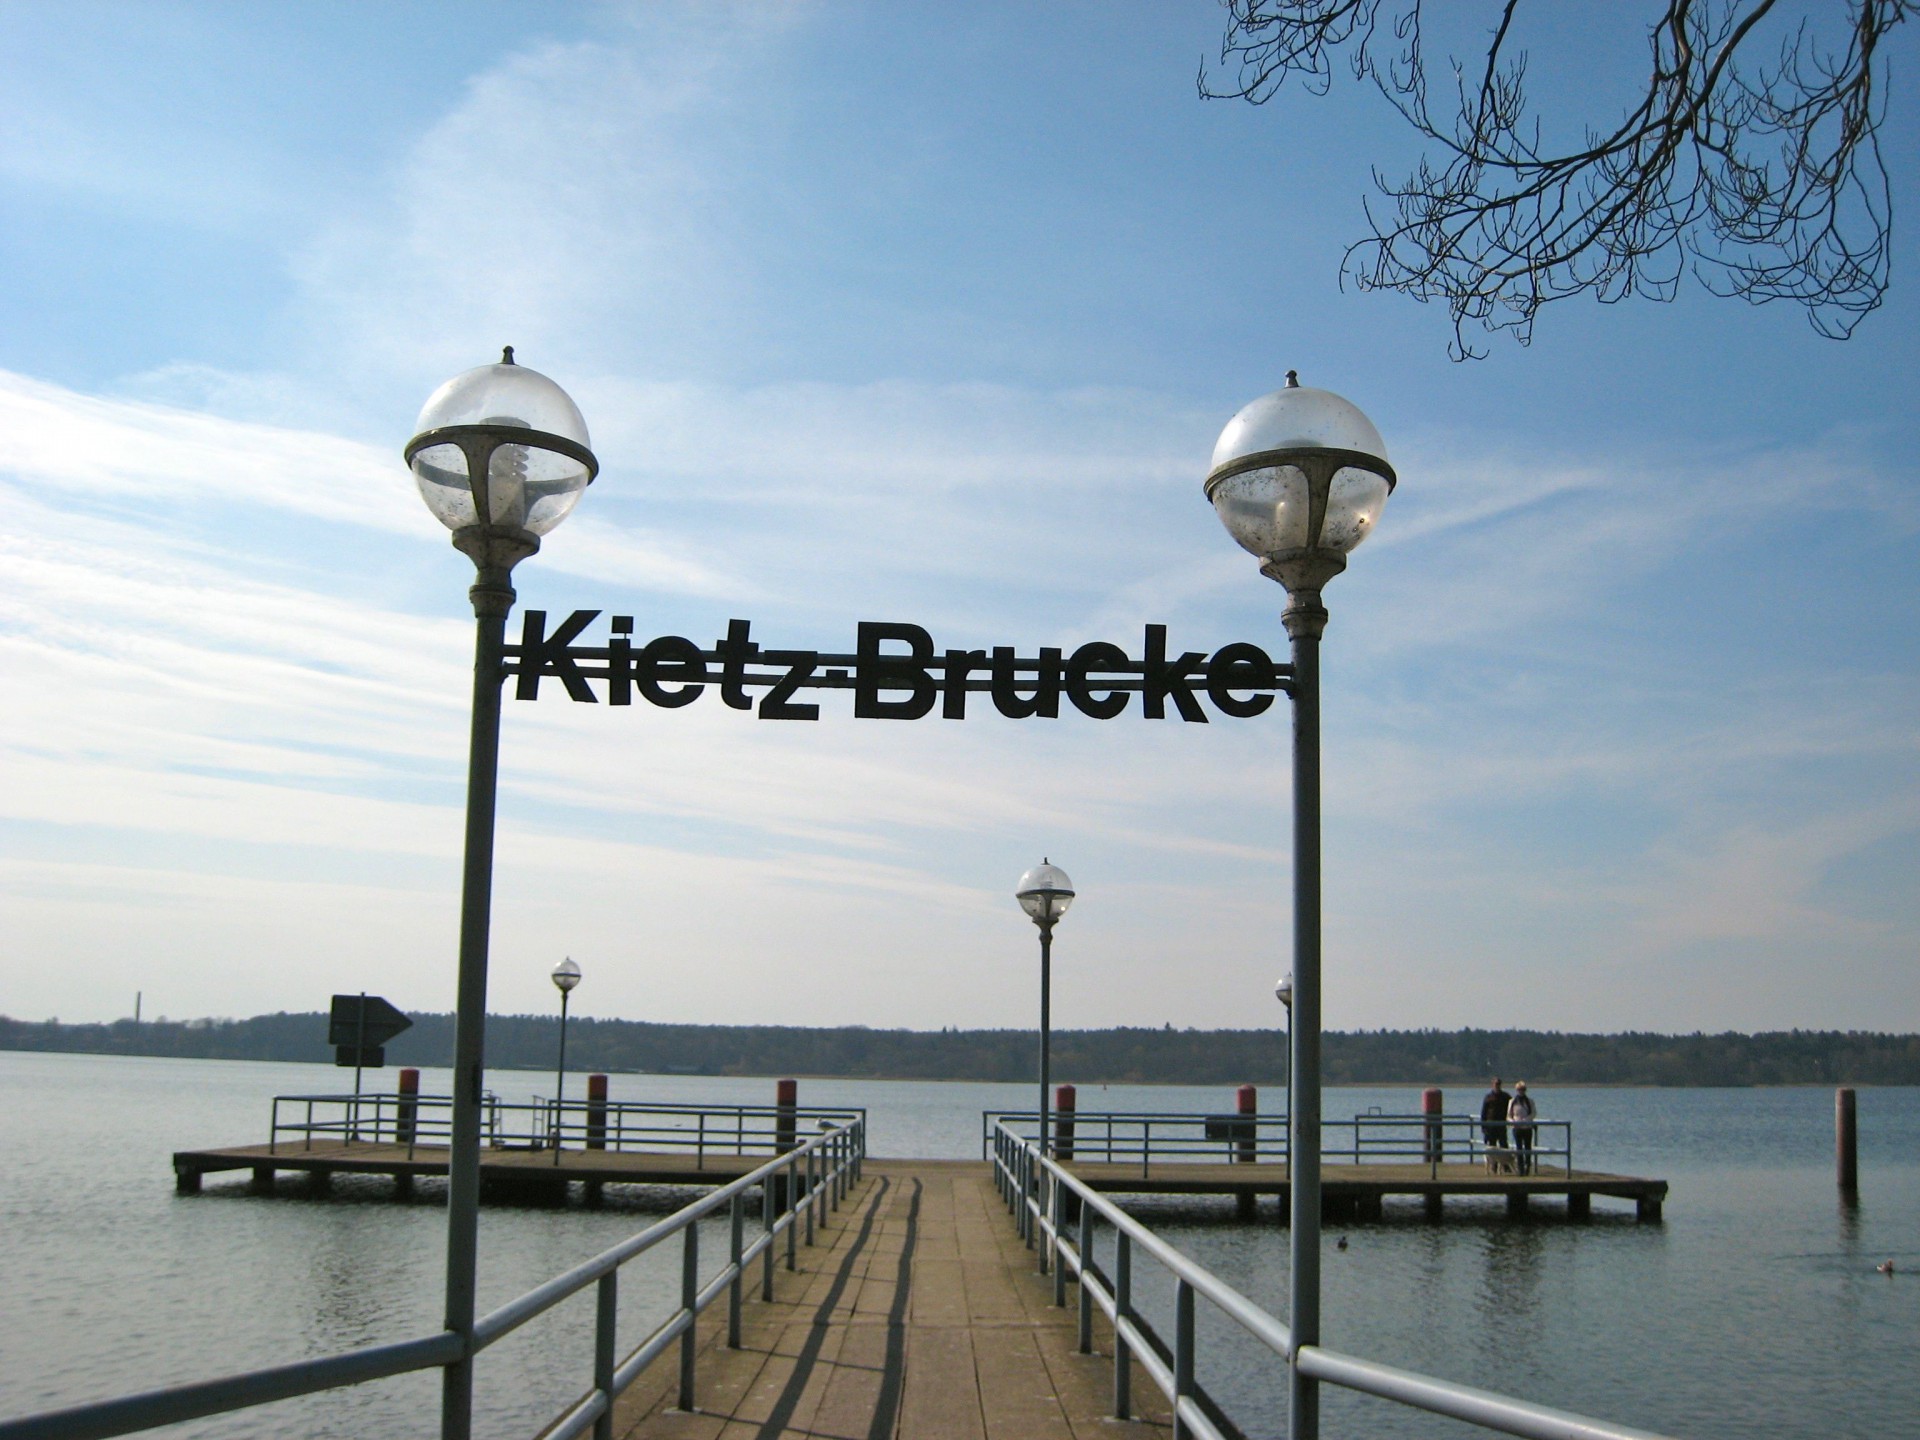 Kietzbruecke